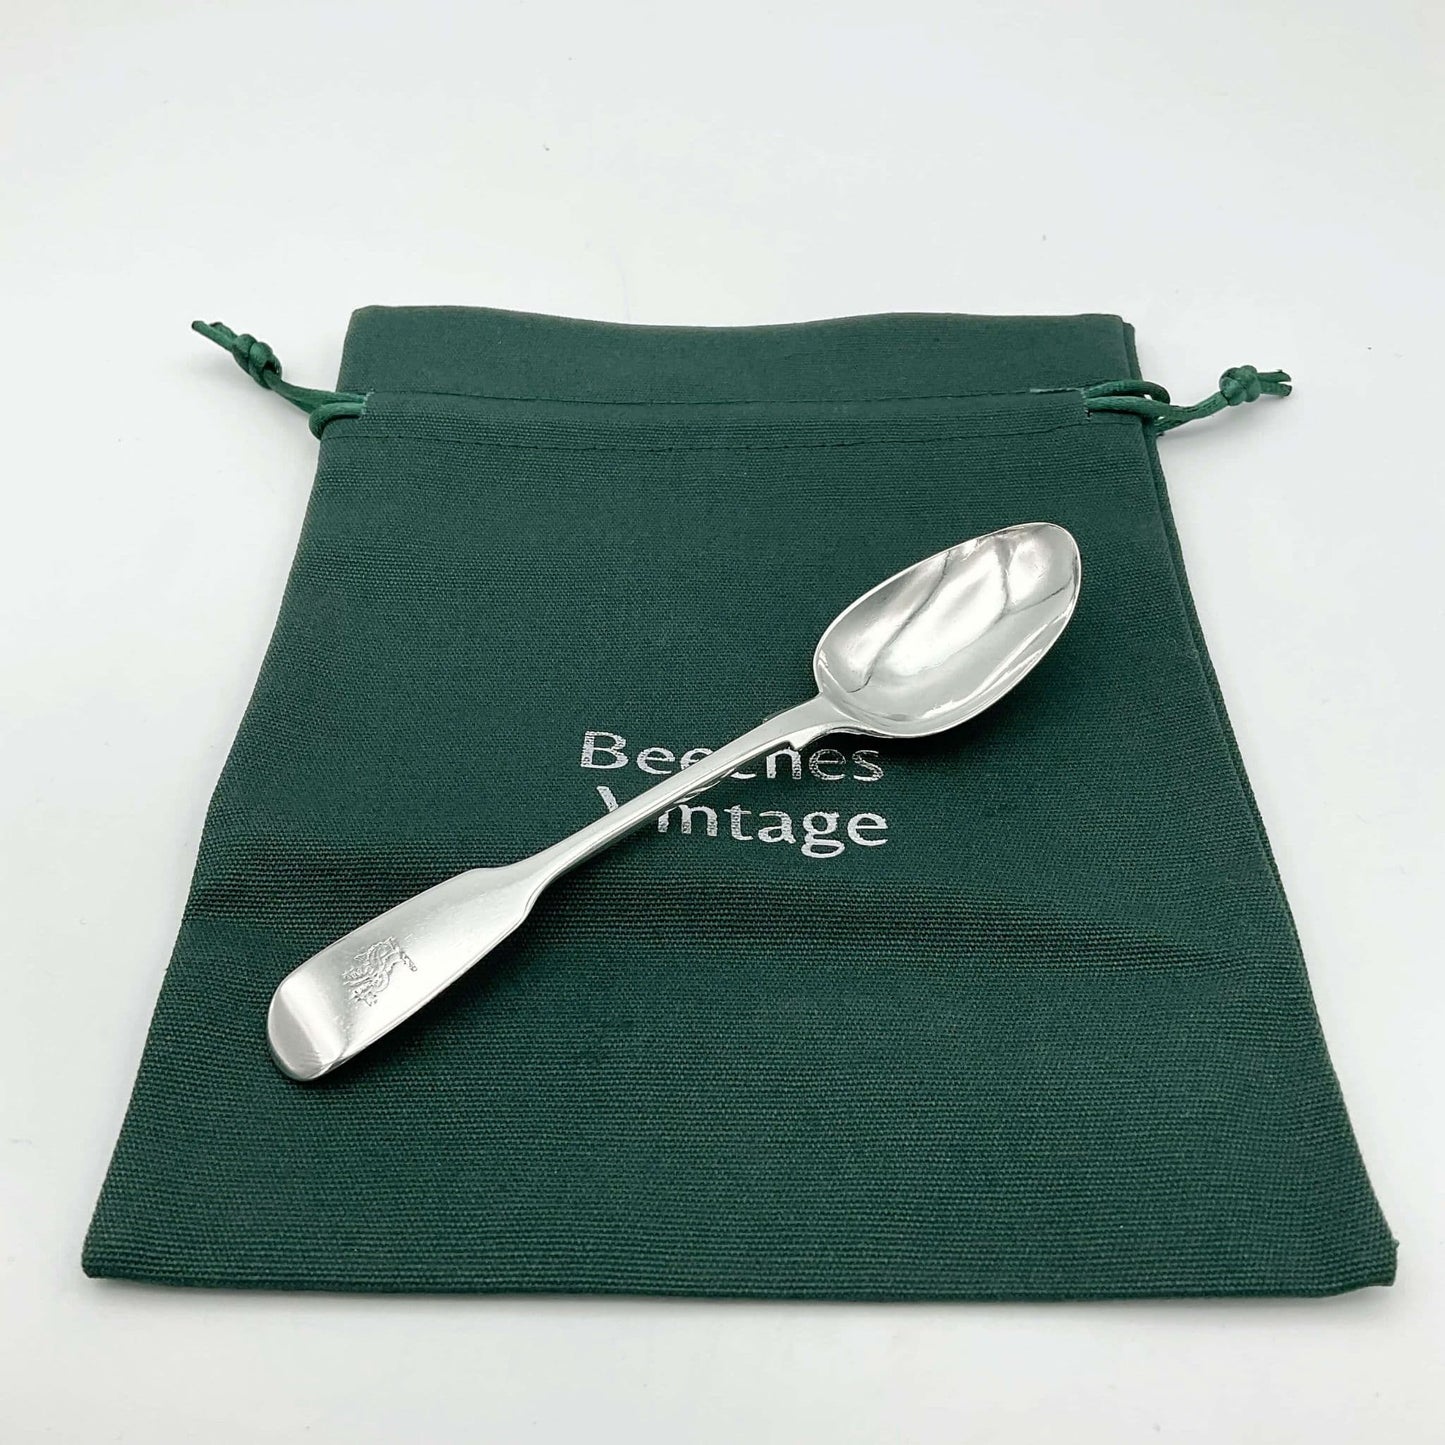 Antique silver teaspoon on a green cotton gift bag